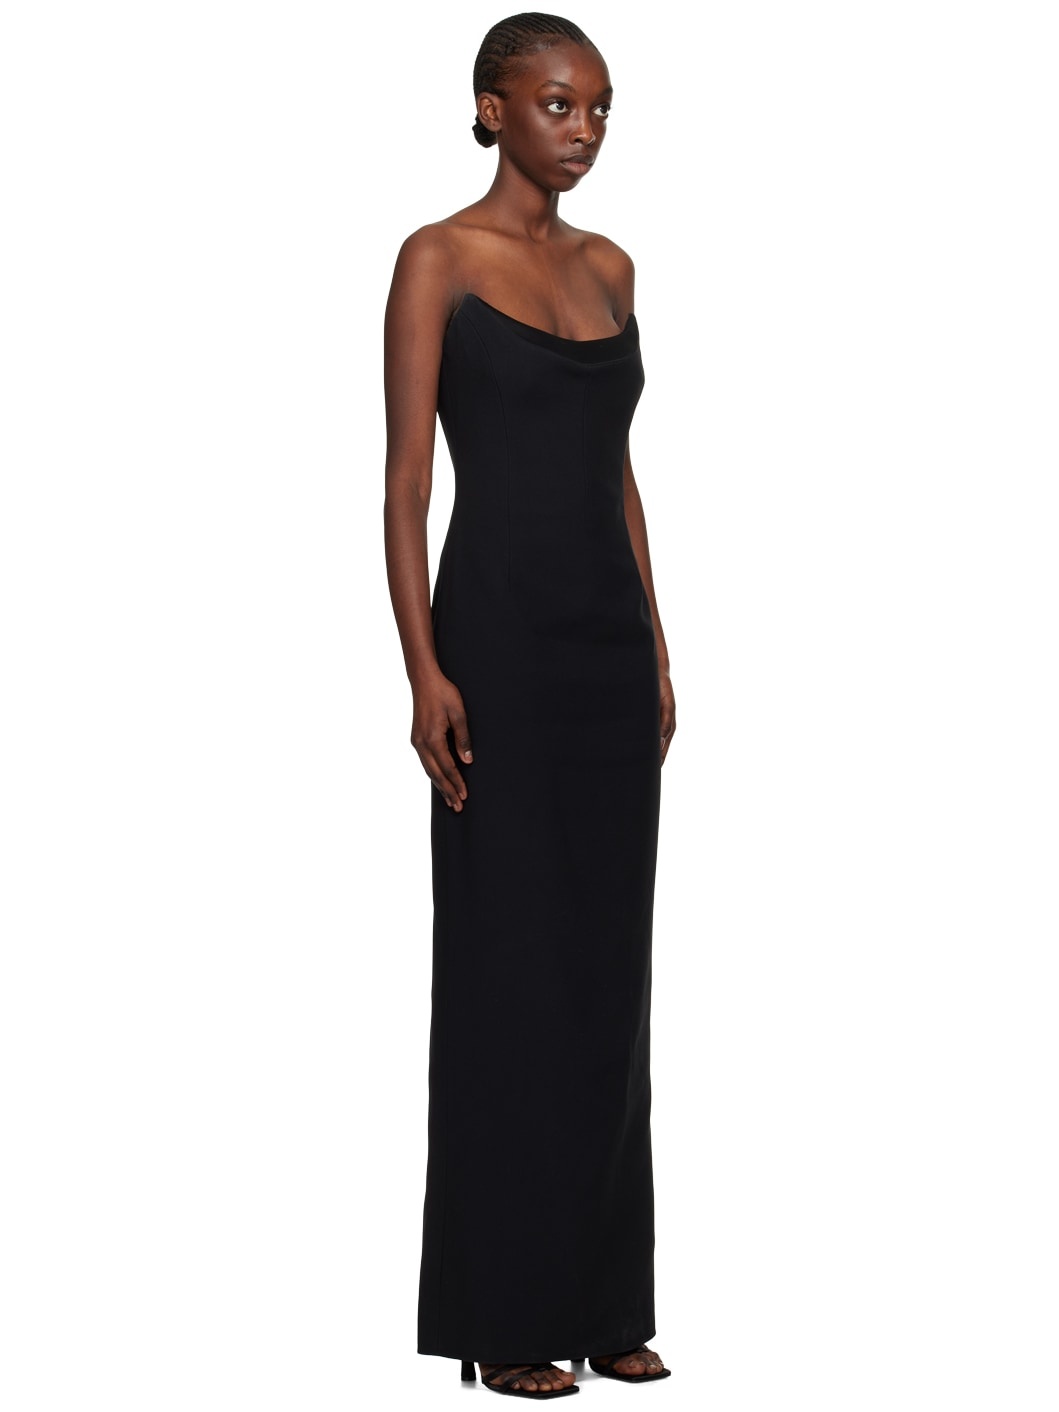 Black Strapless Maxi Dress - 2